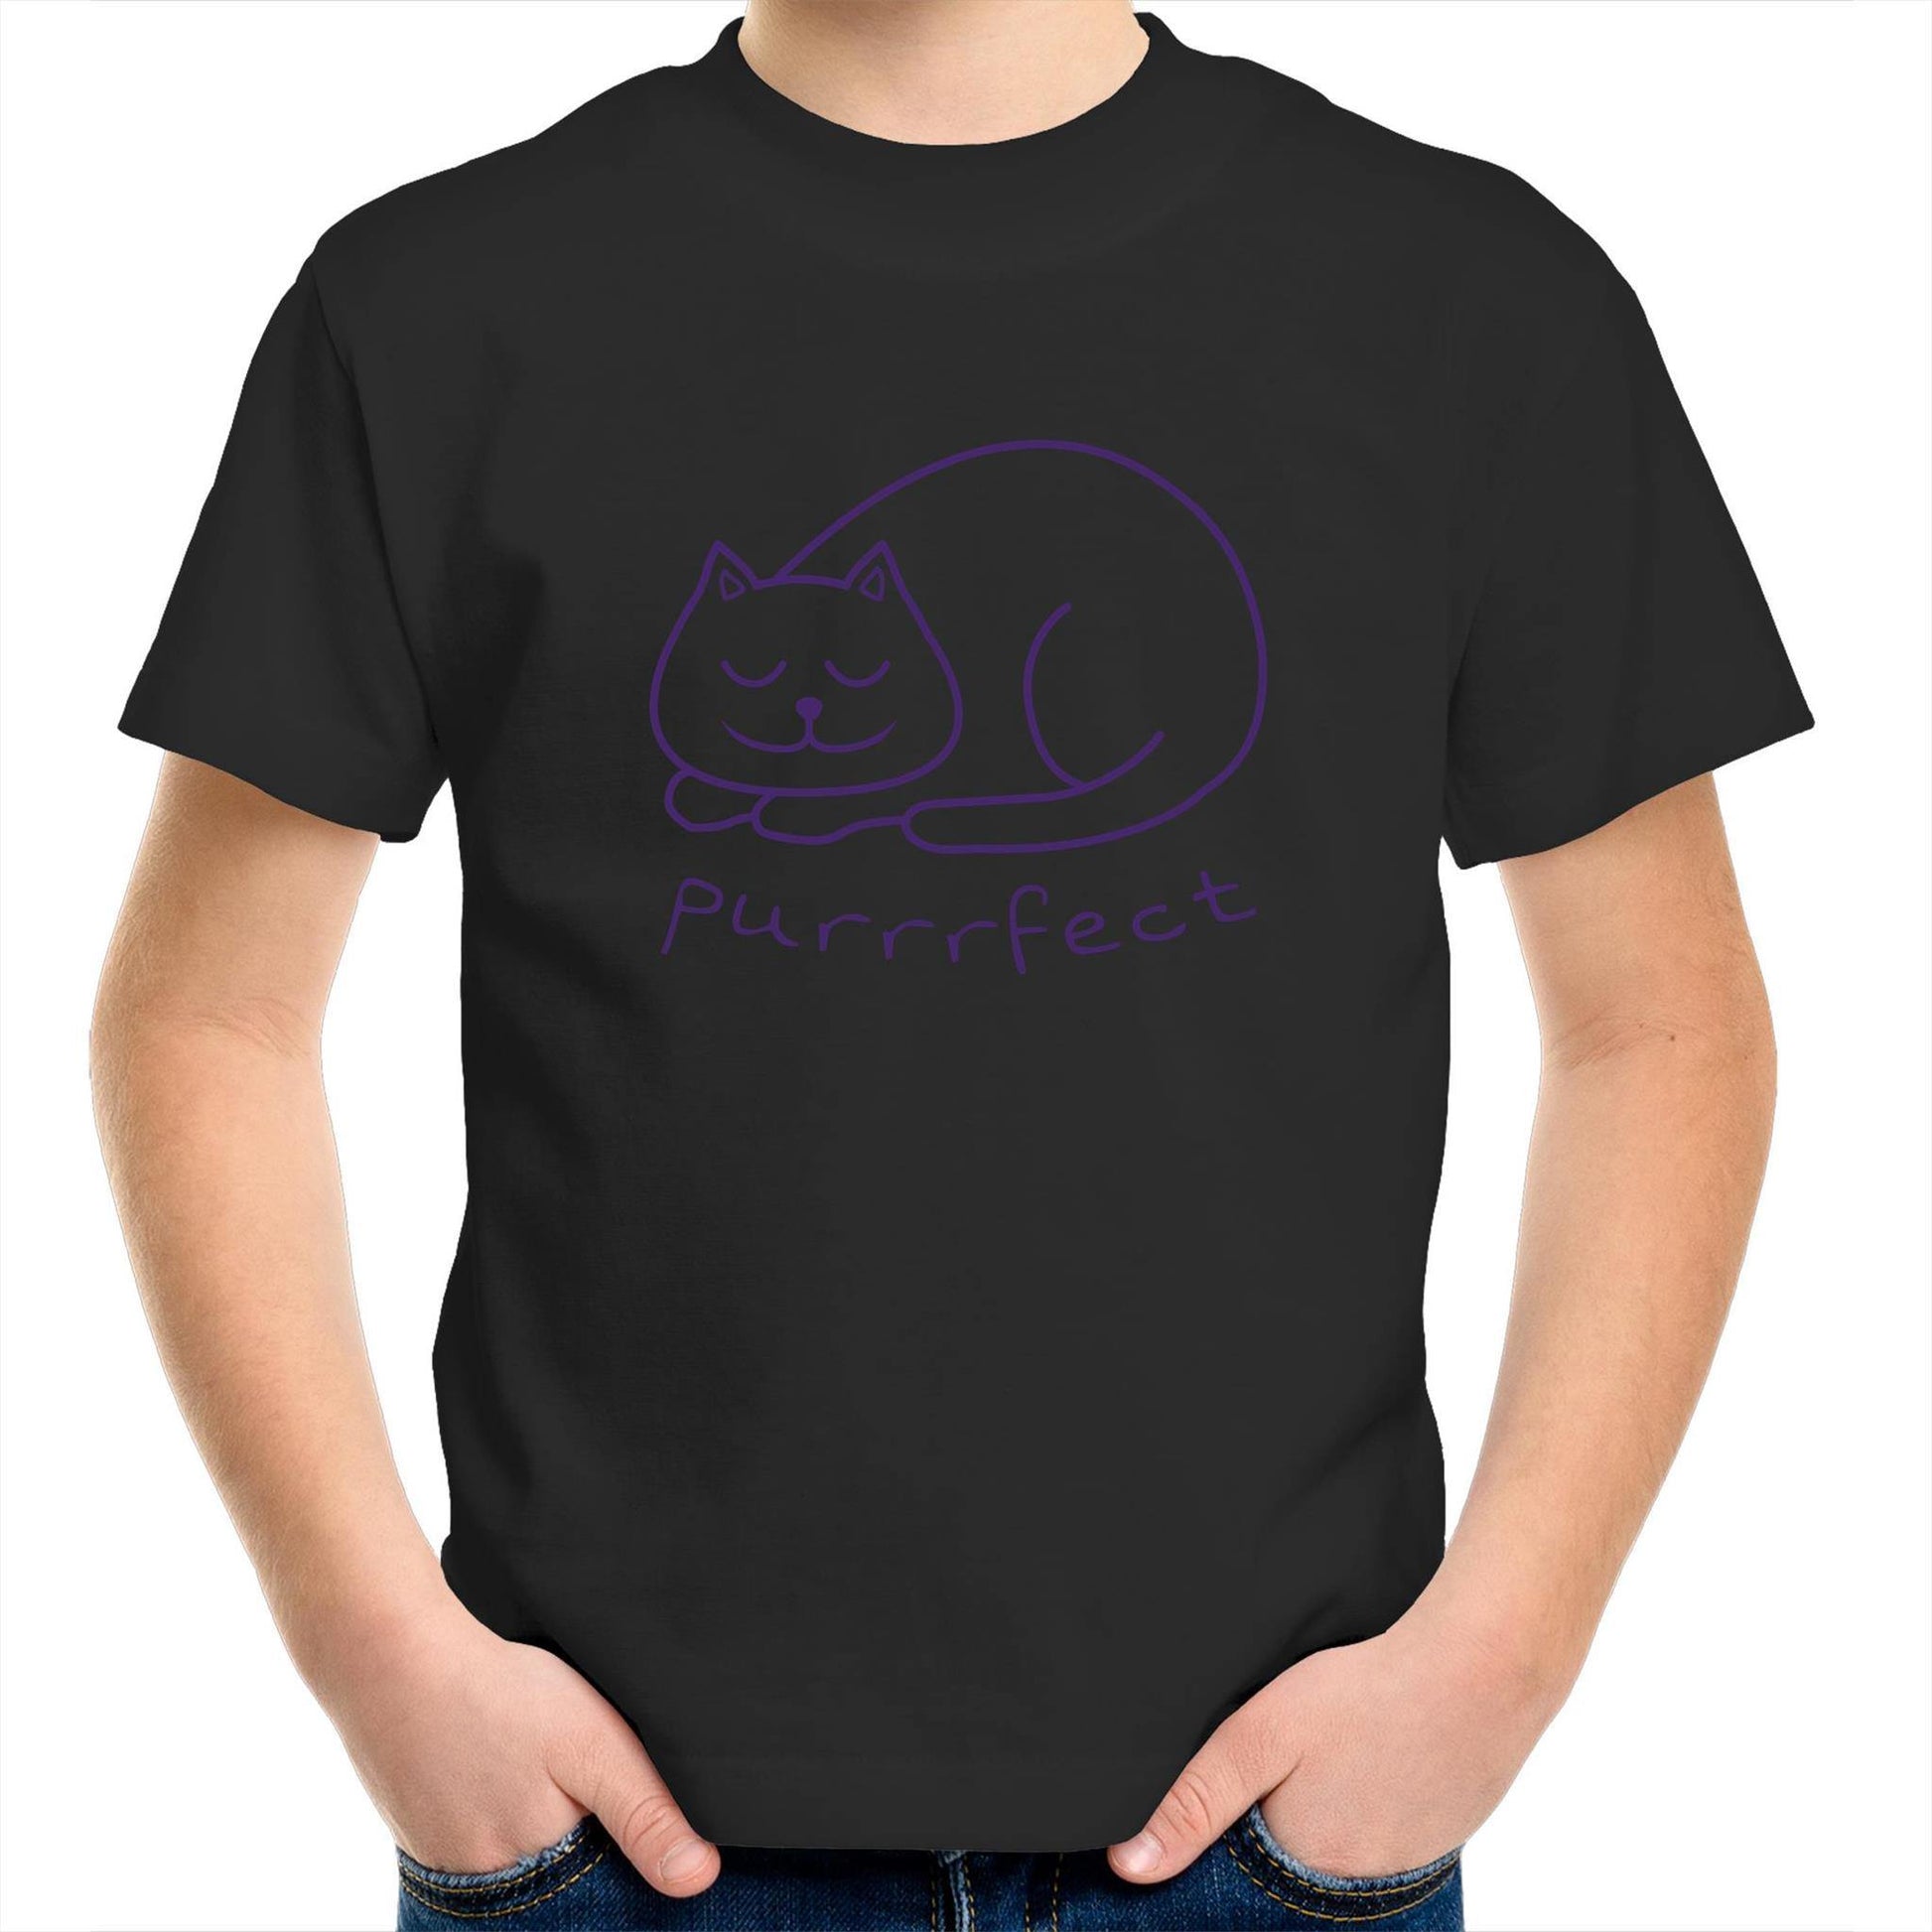 Purrrfect - Kids Youth Crew T-Shirt Black Kids Youth T-shirt animal